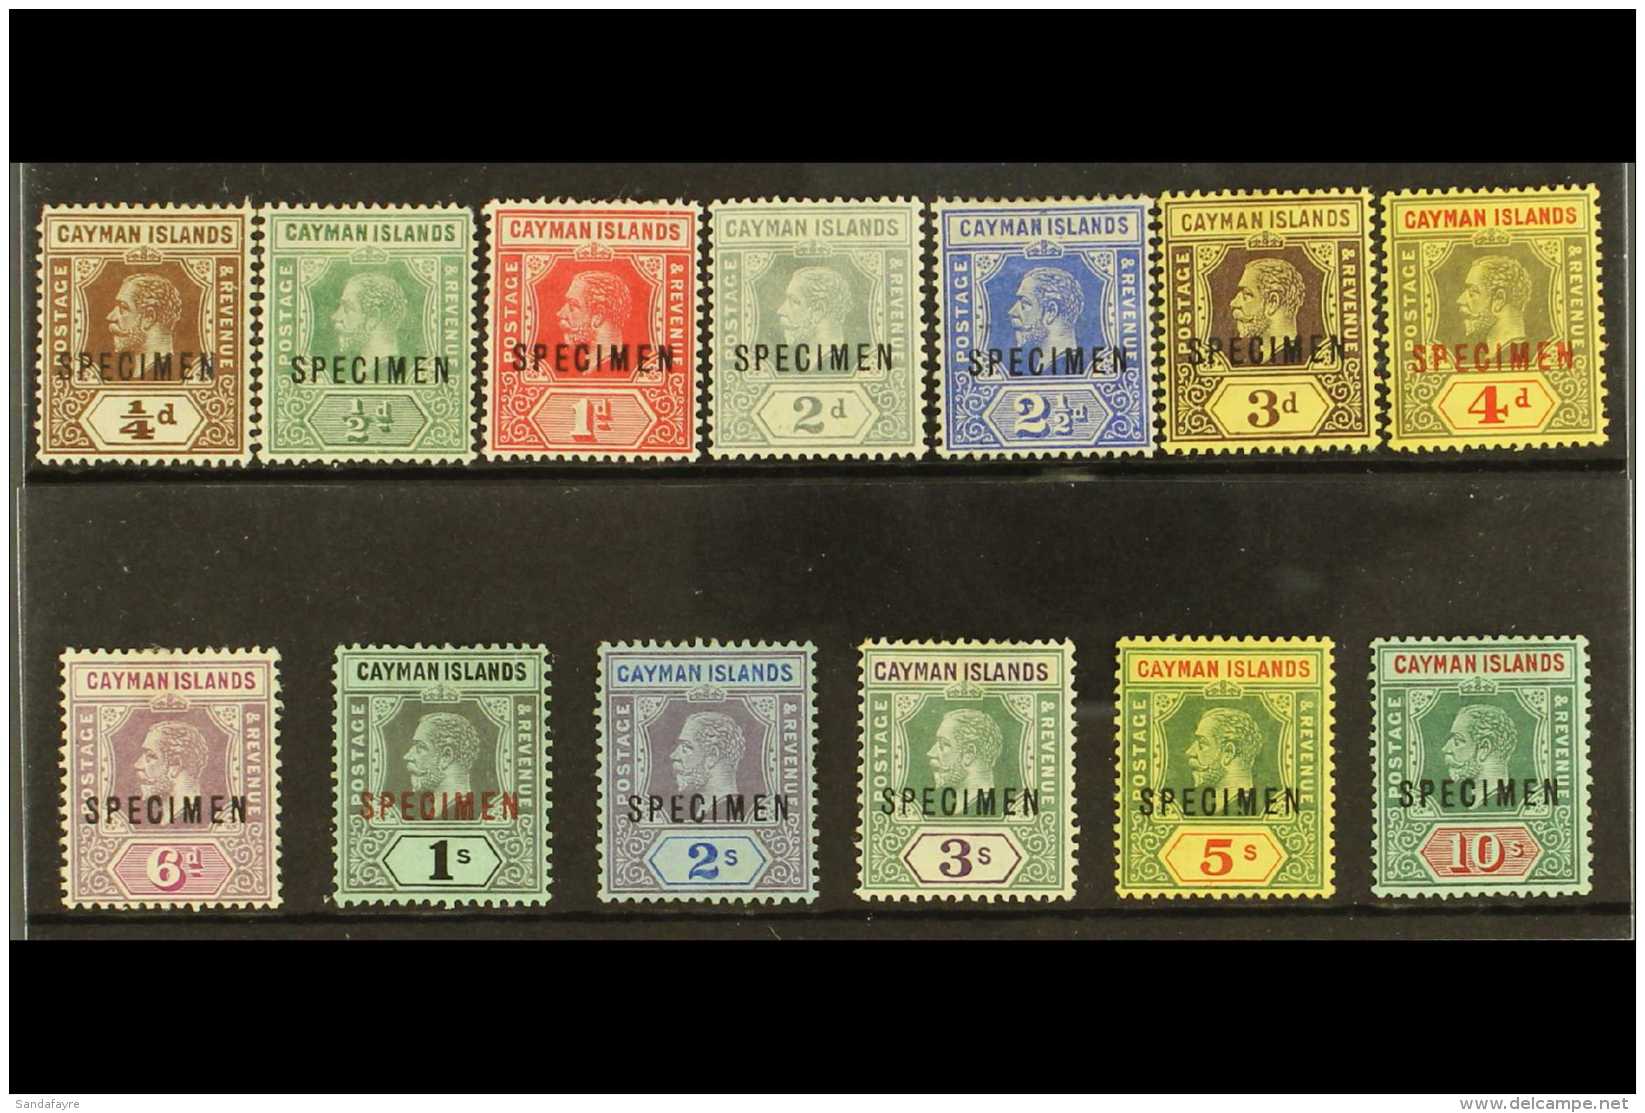 1912-20 Complete Set With "SPECIMEN" Overprints, SG 40s/52s, Fine Mint, Fresh Colours, Attractive. (13 Stamps) For... - Kaaiman Eilanden